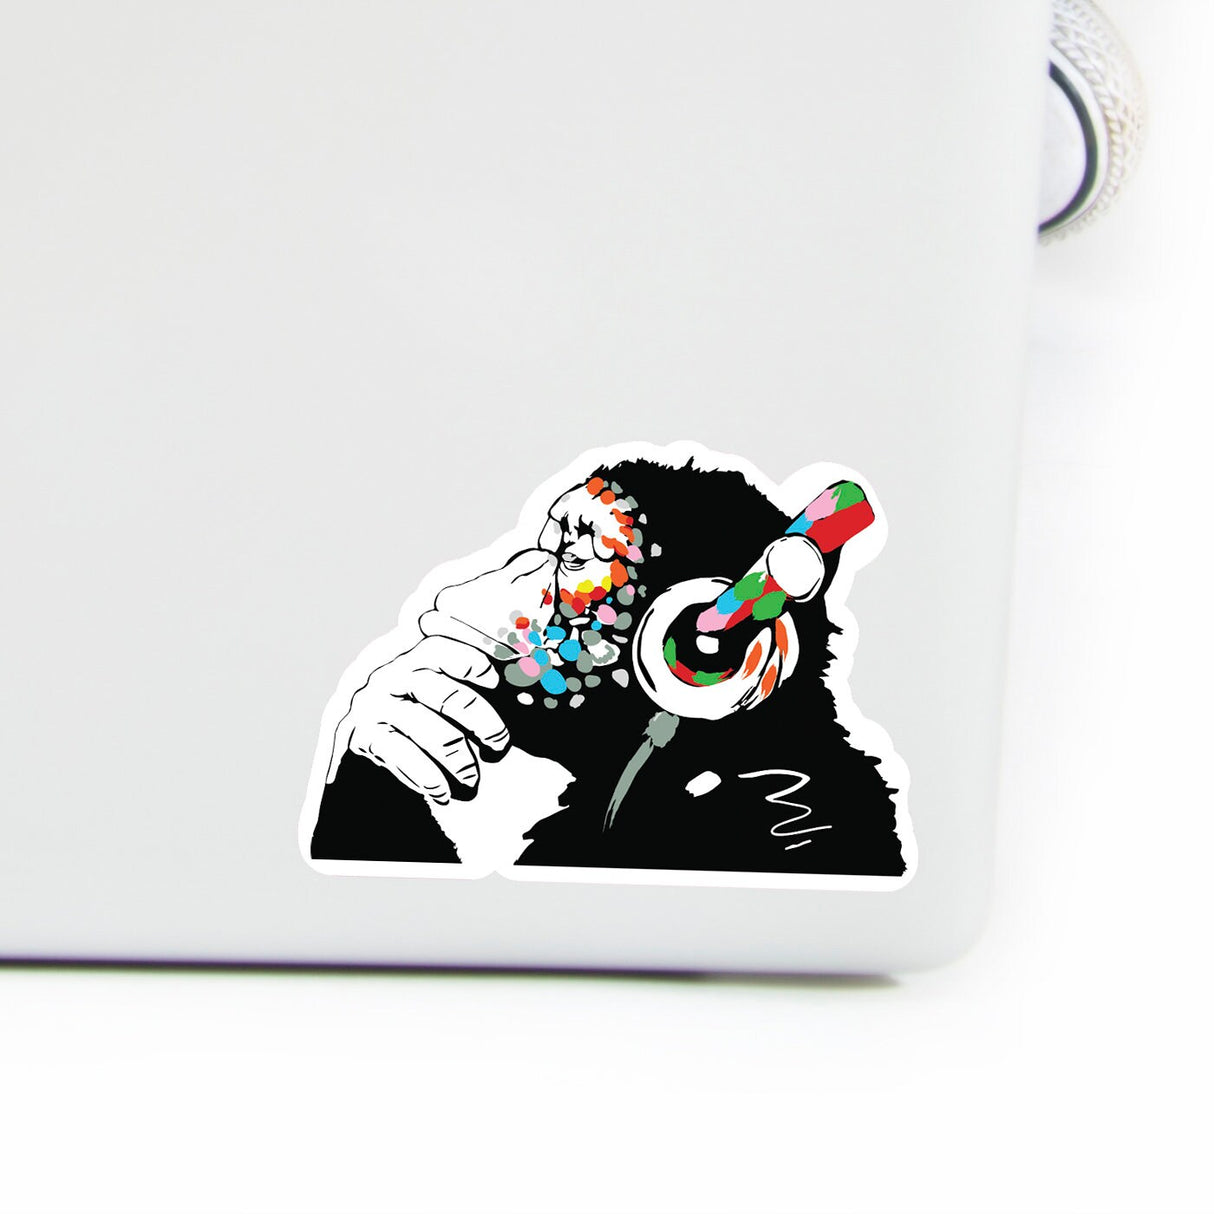 Glow in the Dark Monkey Laptop Vinyl Sticker - Glowing Music Decal For Macbook